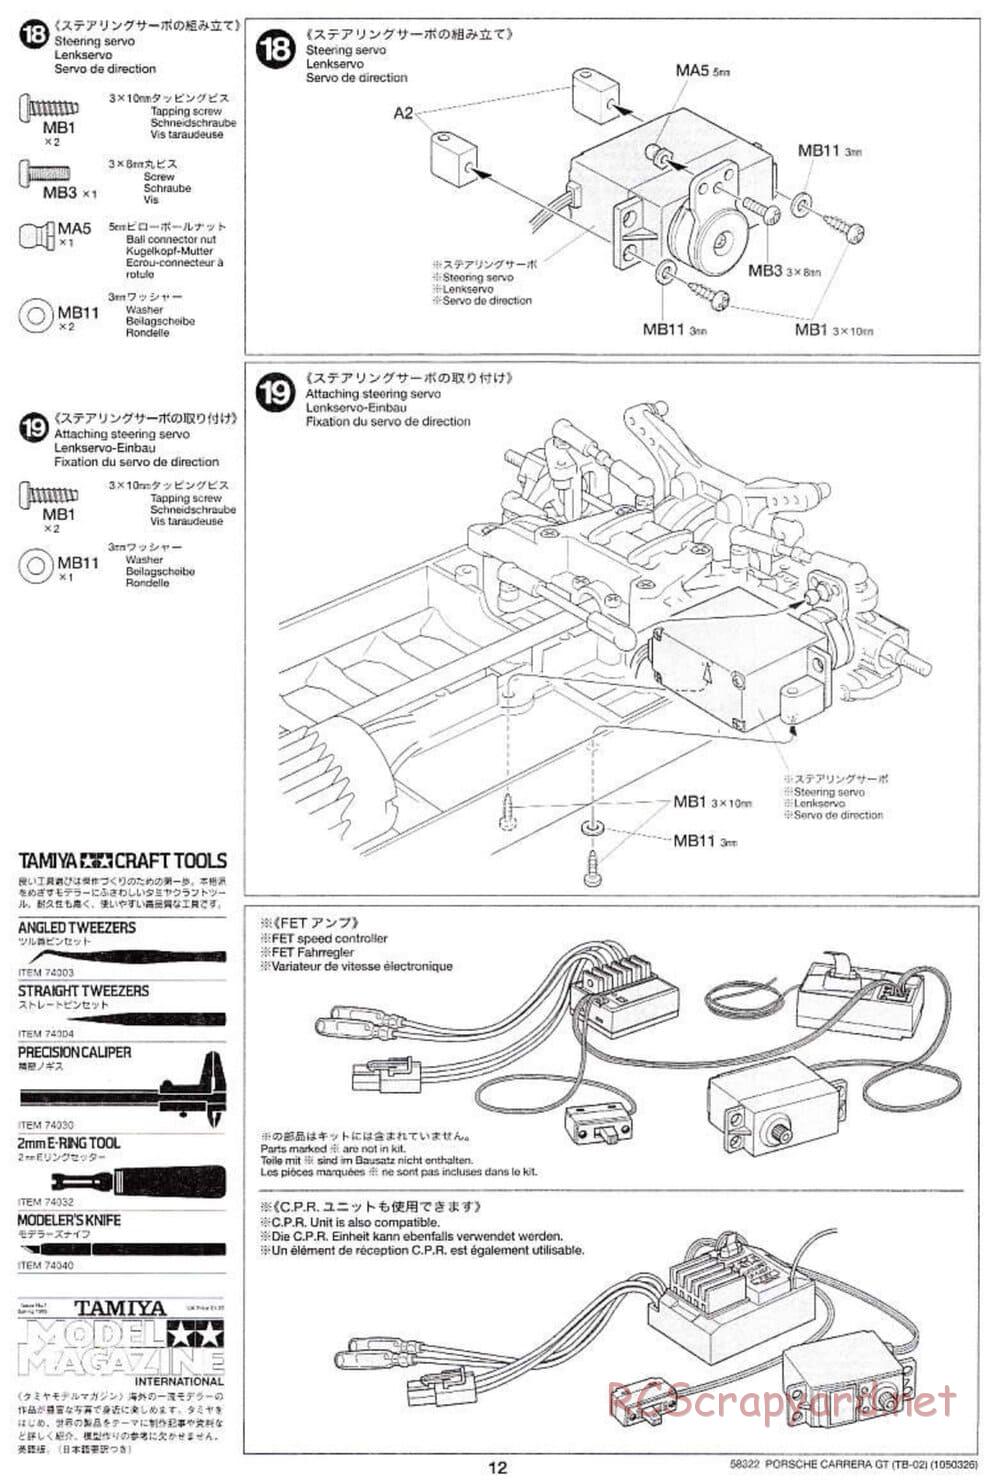 Tamiya - Porsche Carrera GT - TB-02 Chassis - Manual - Page 12